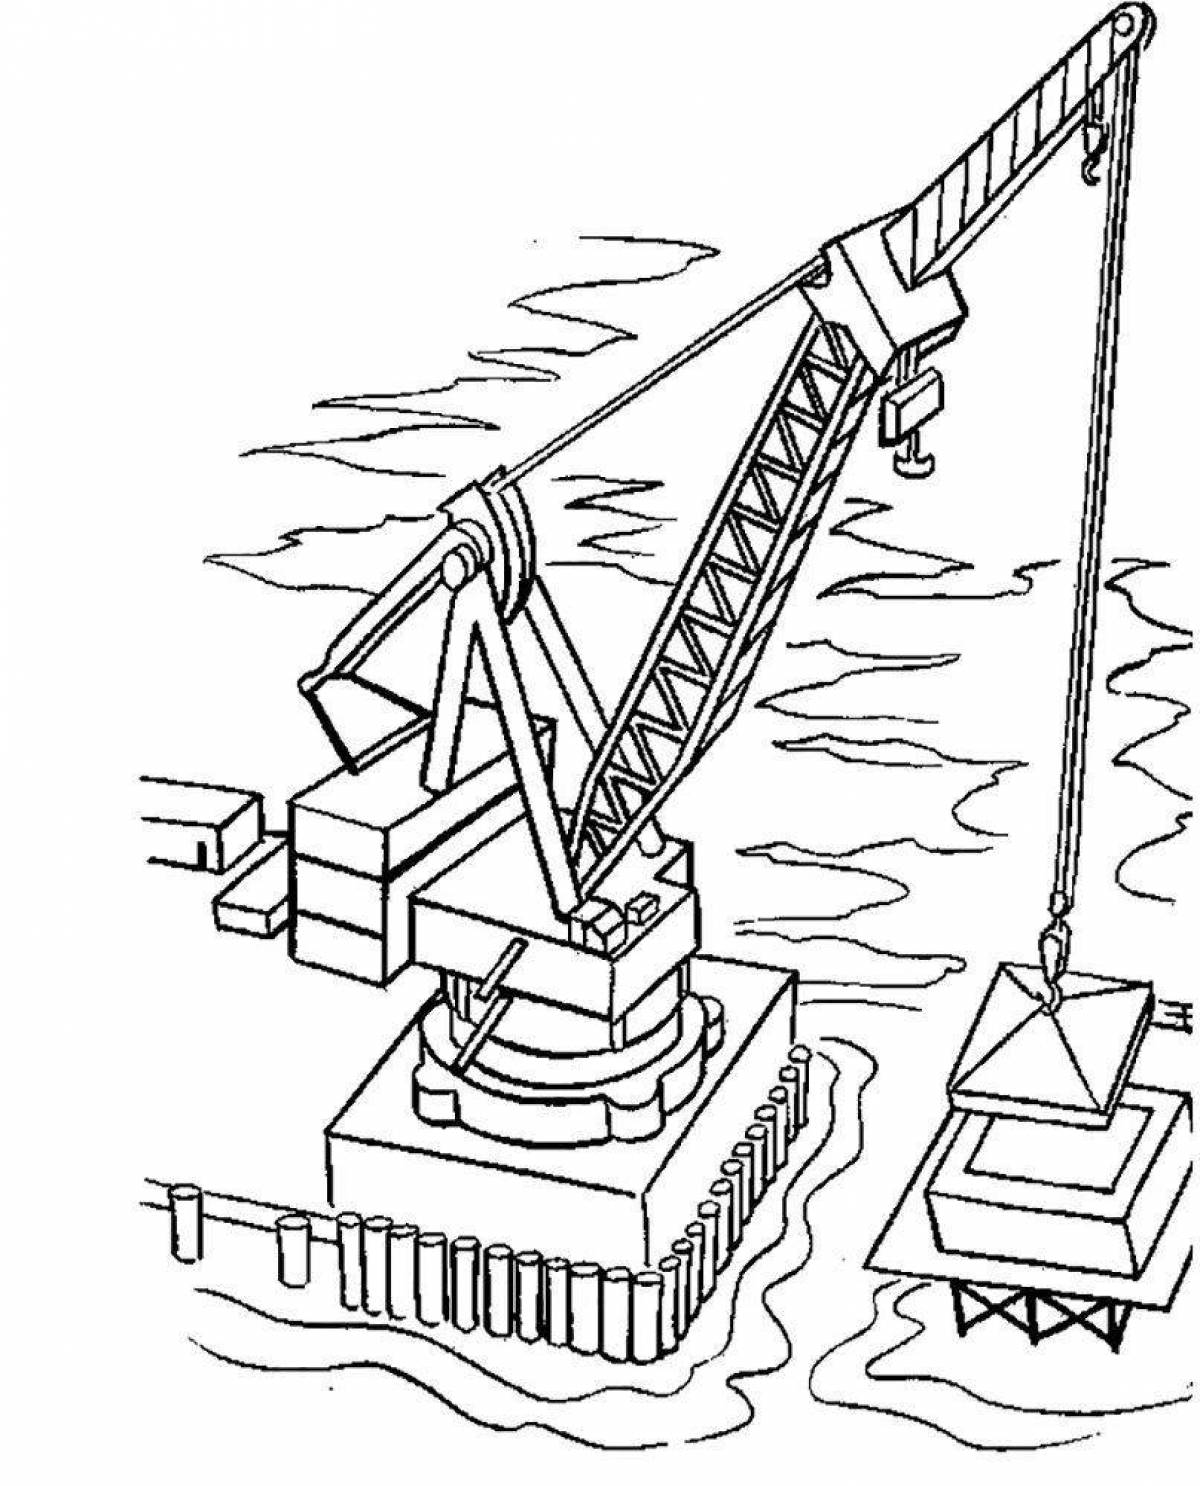 Construction crane #7